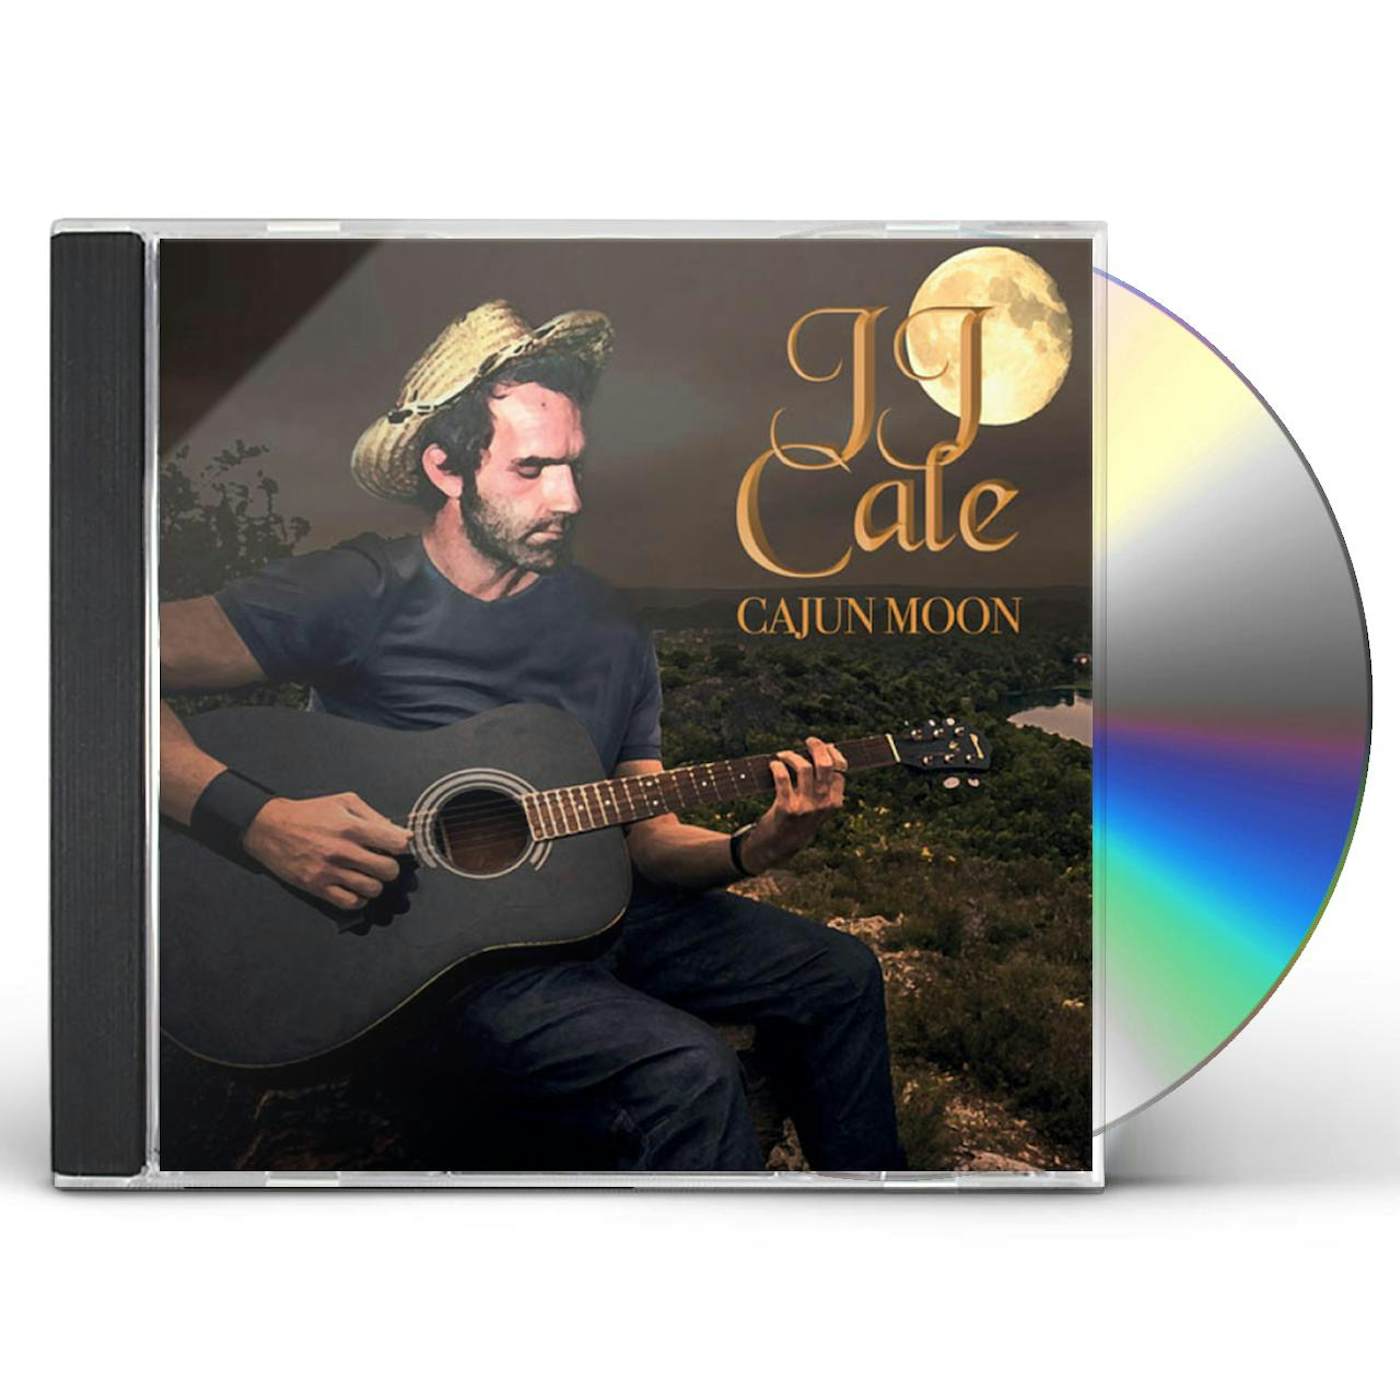 J.J. Cale CAJUN MOON CD